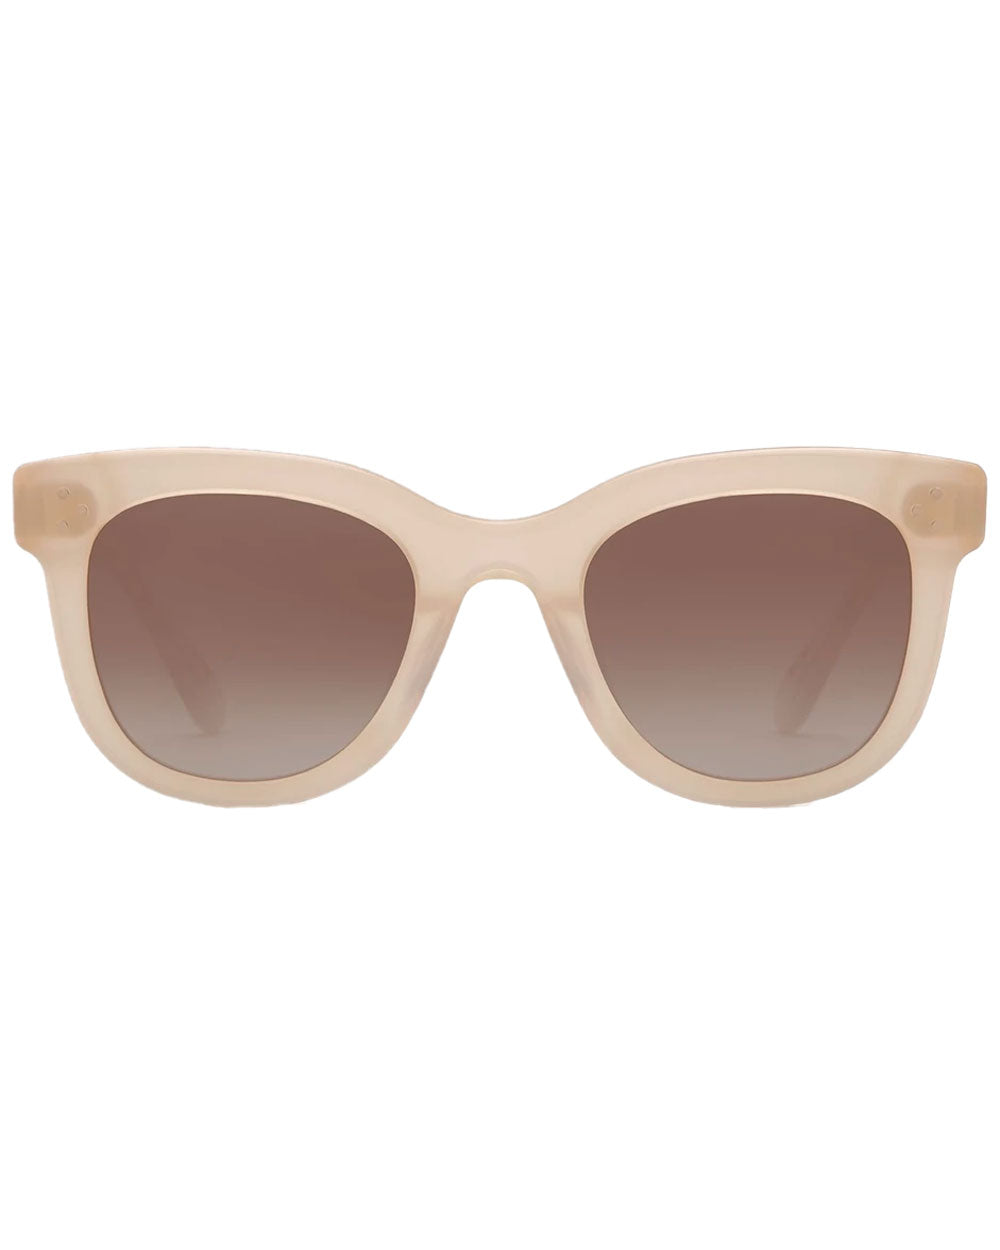 Jena Sunglasses in Mirrored Blonde